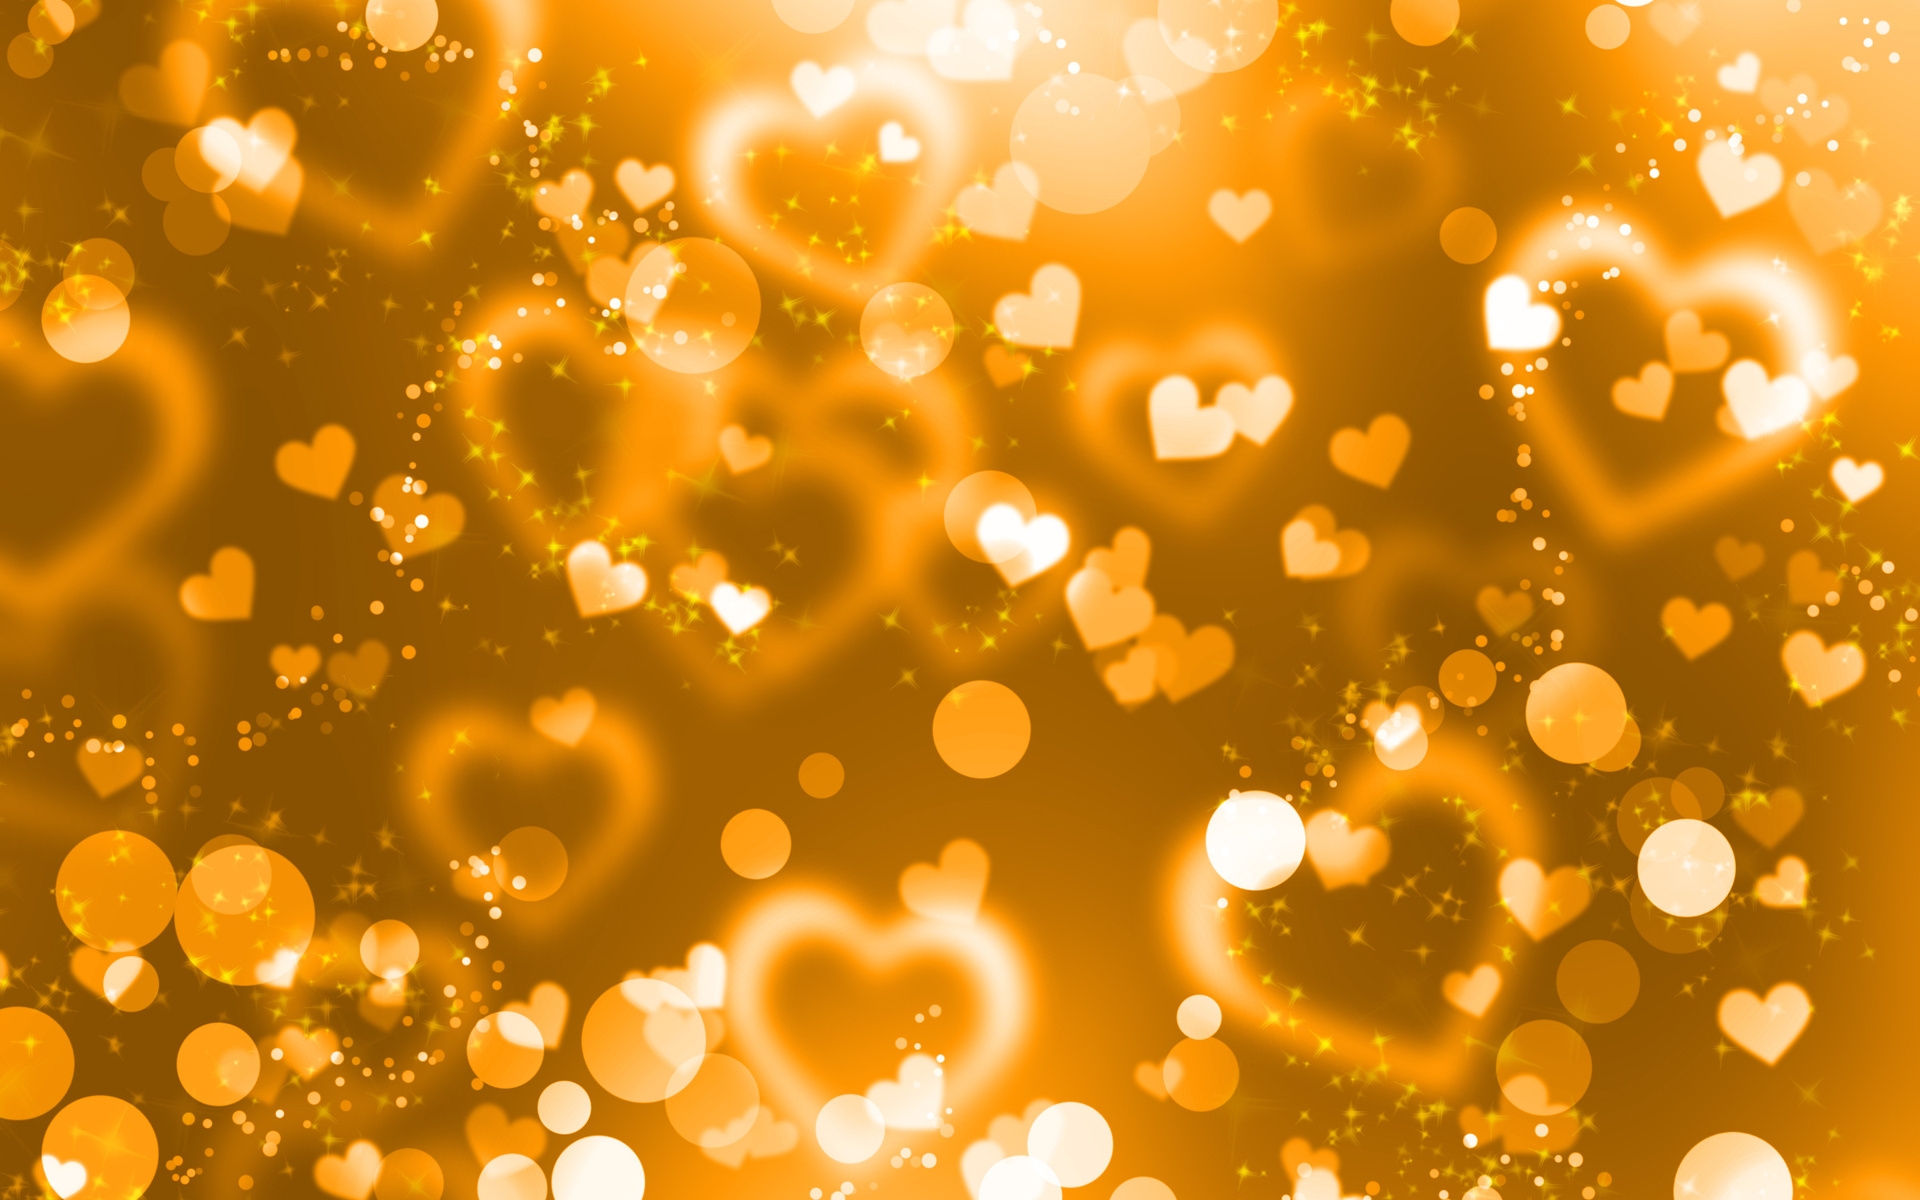 Gold Glitter Background Images - Gold Glitter Background Wallpaper (58 ...